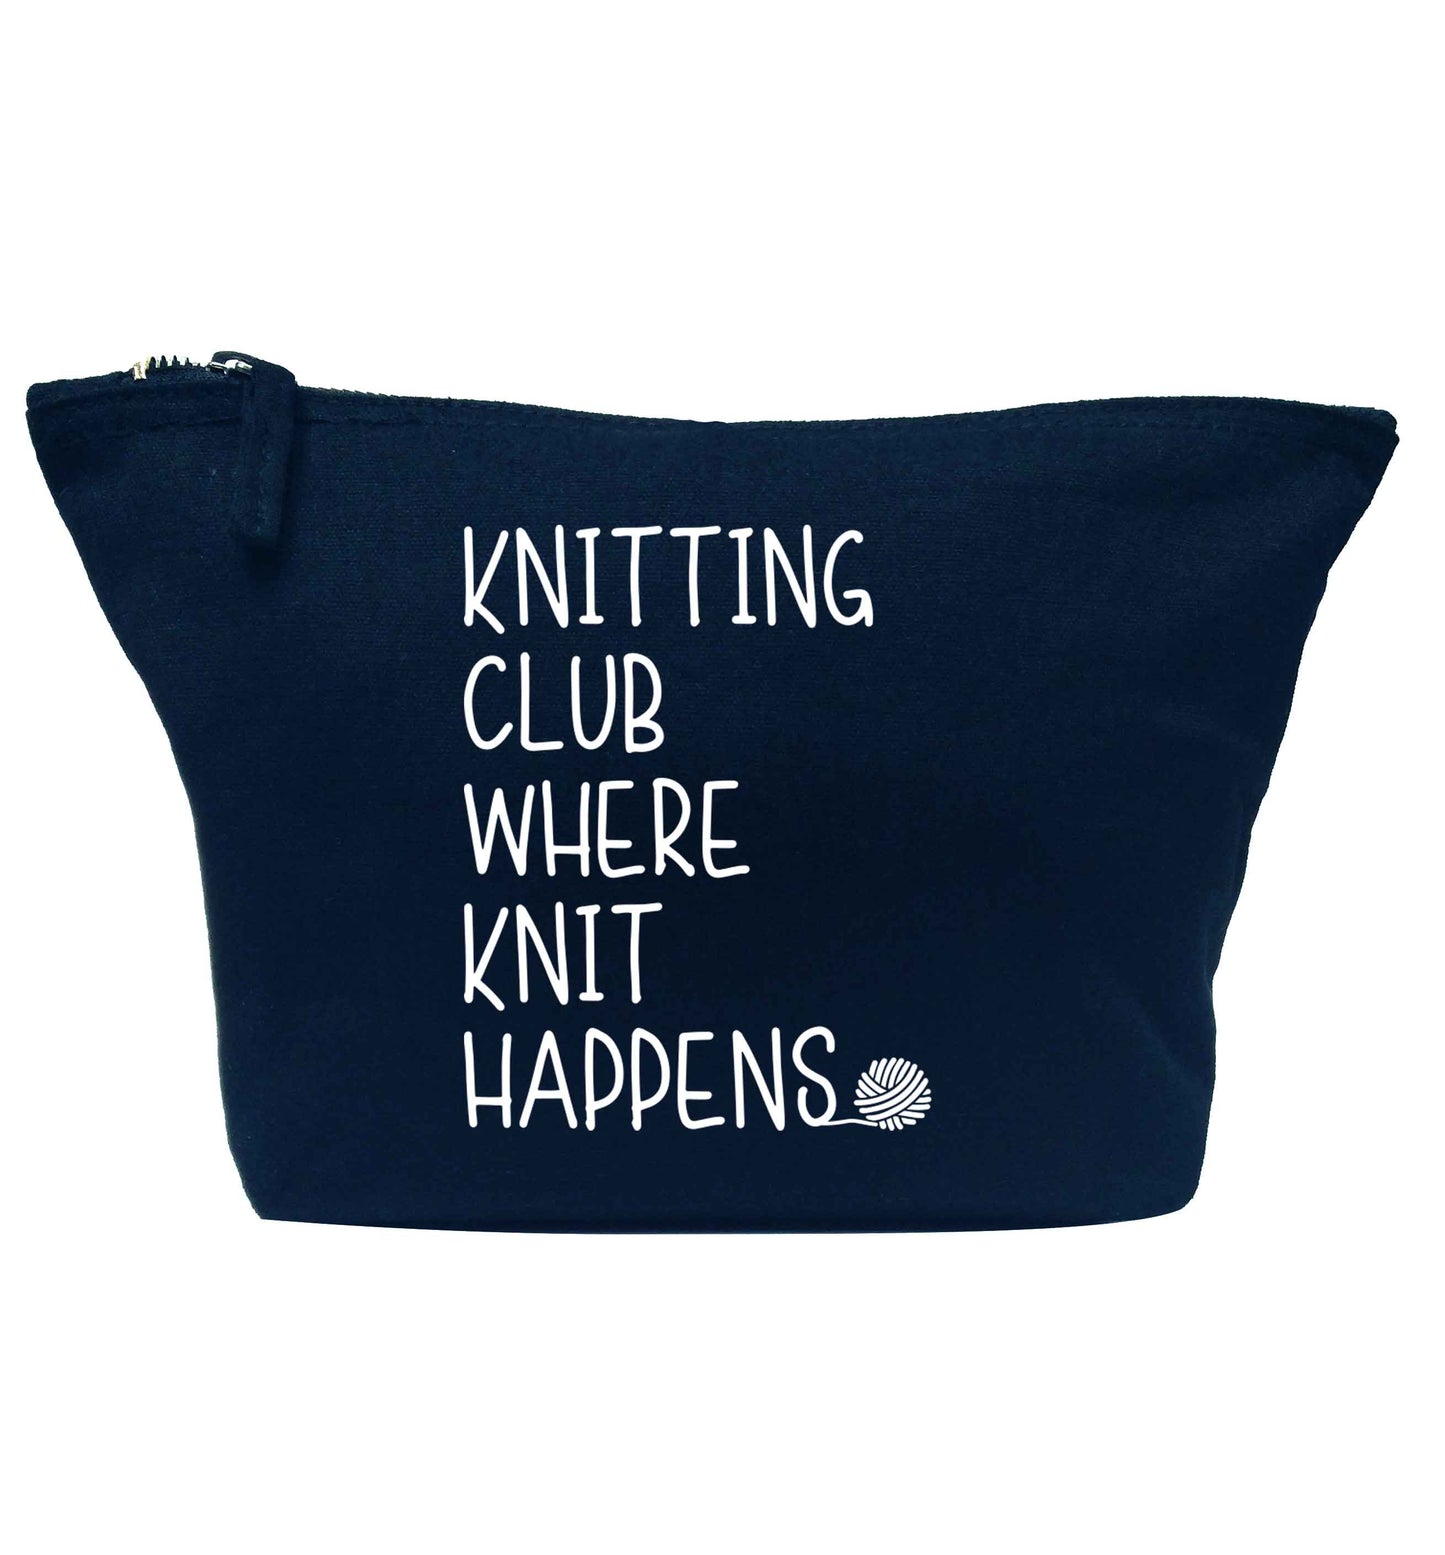 Knitting club where knit happens navy makeup bag